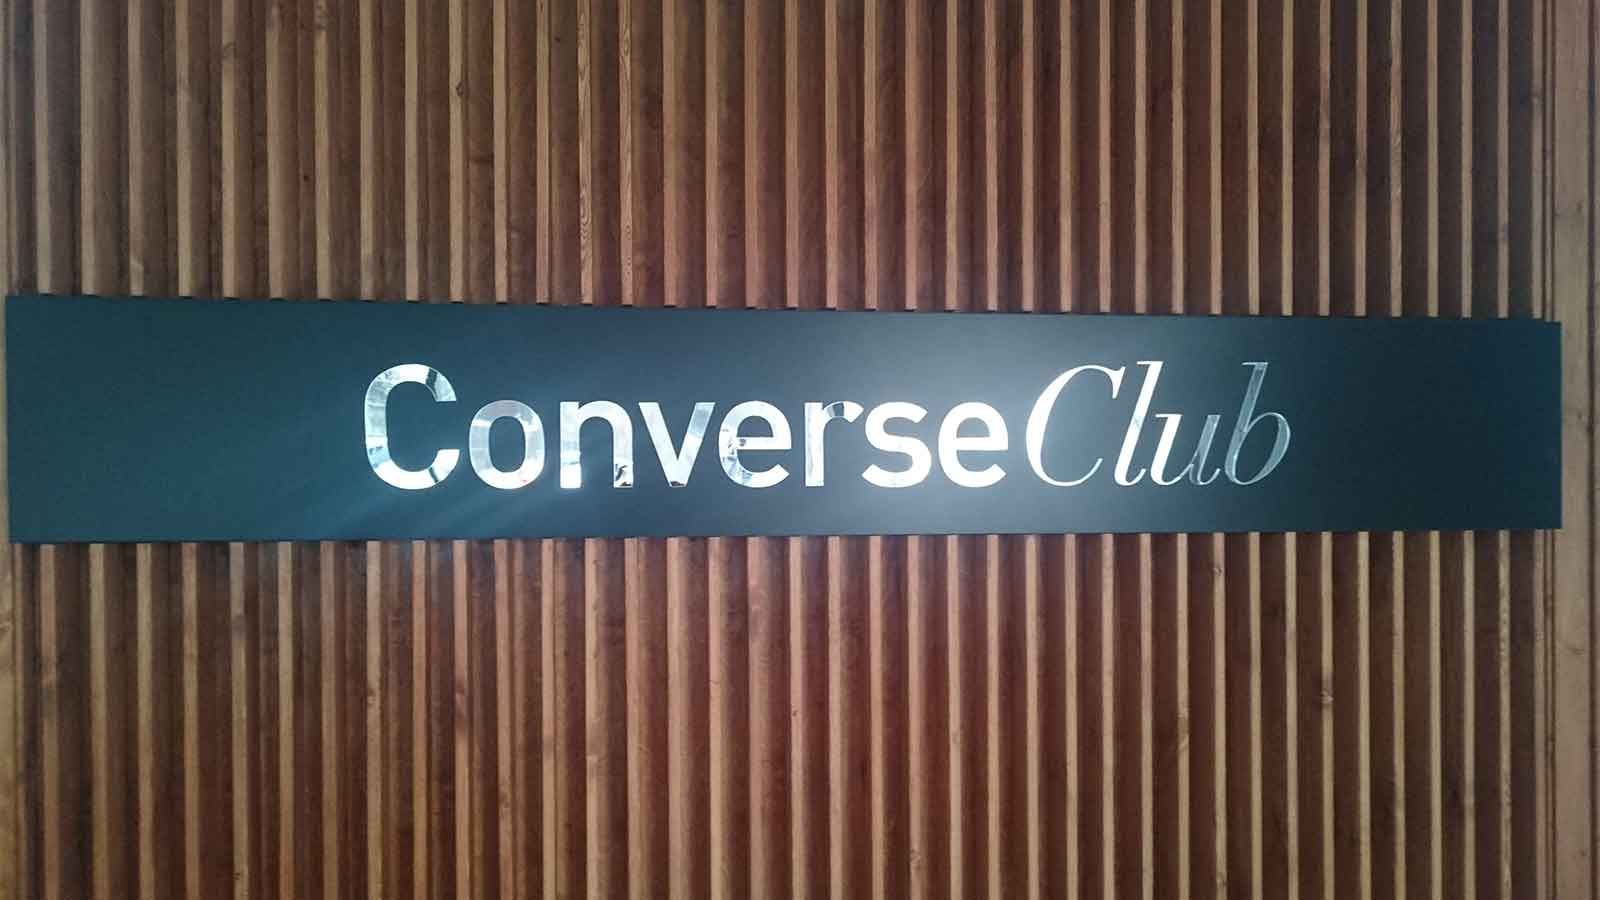 converse club acrylic and aluminum logo